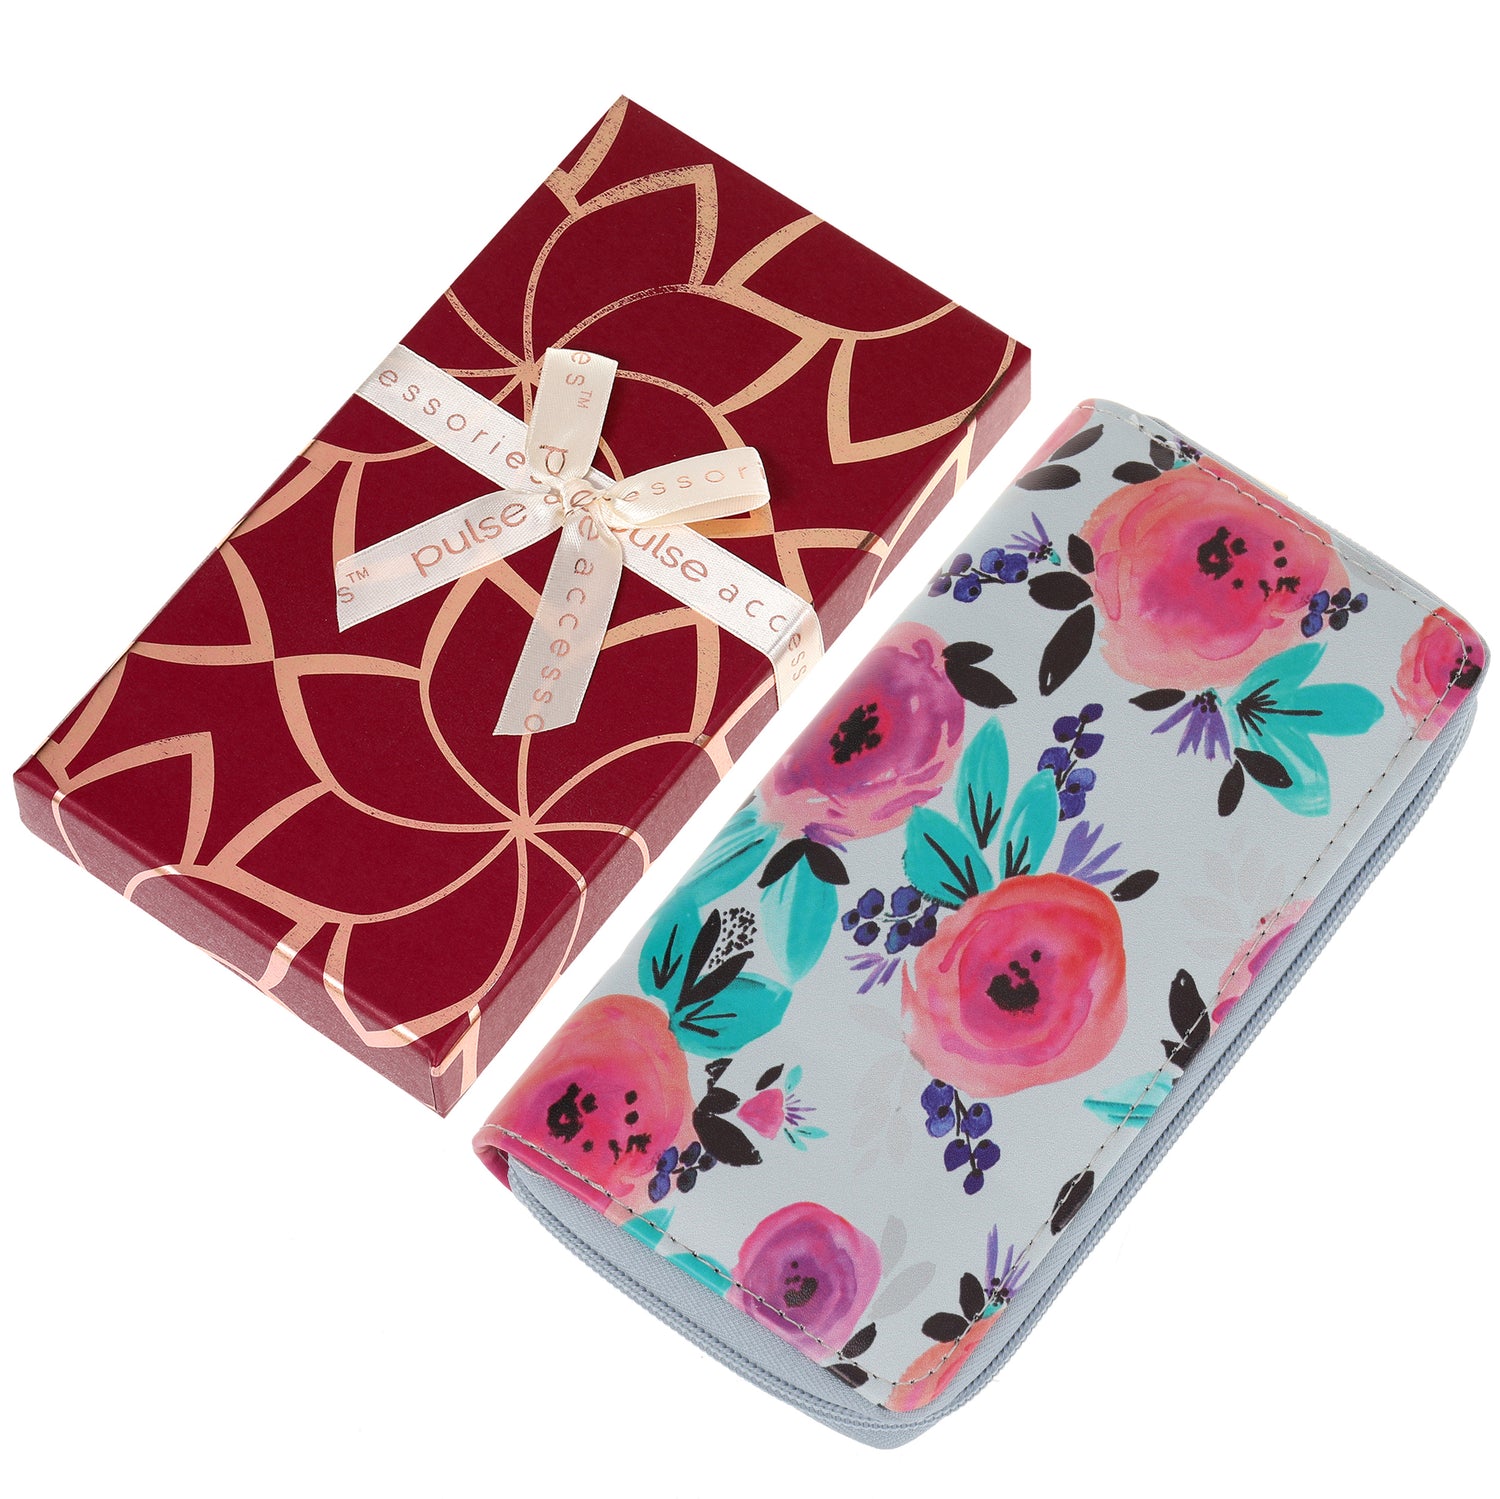 Pulse Ladies Gift Box Wallet - White